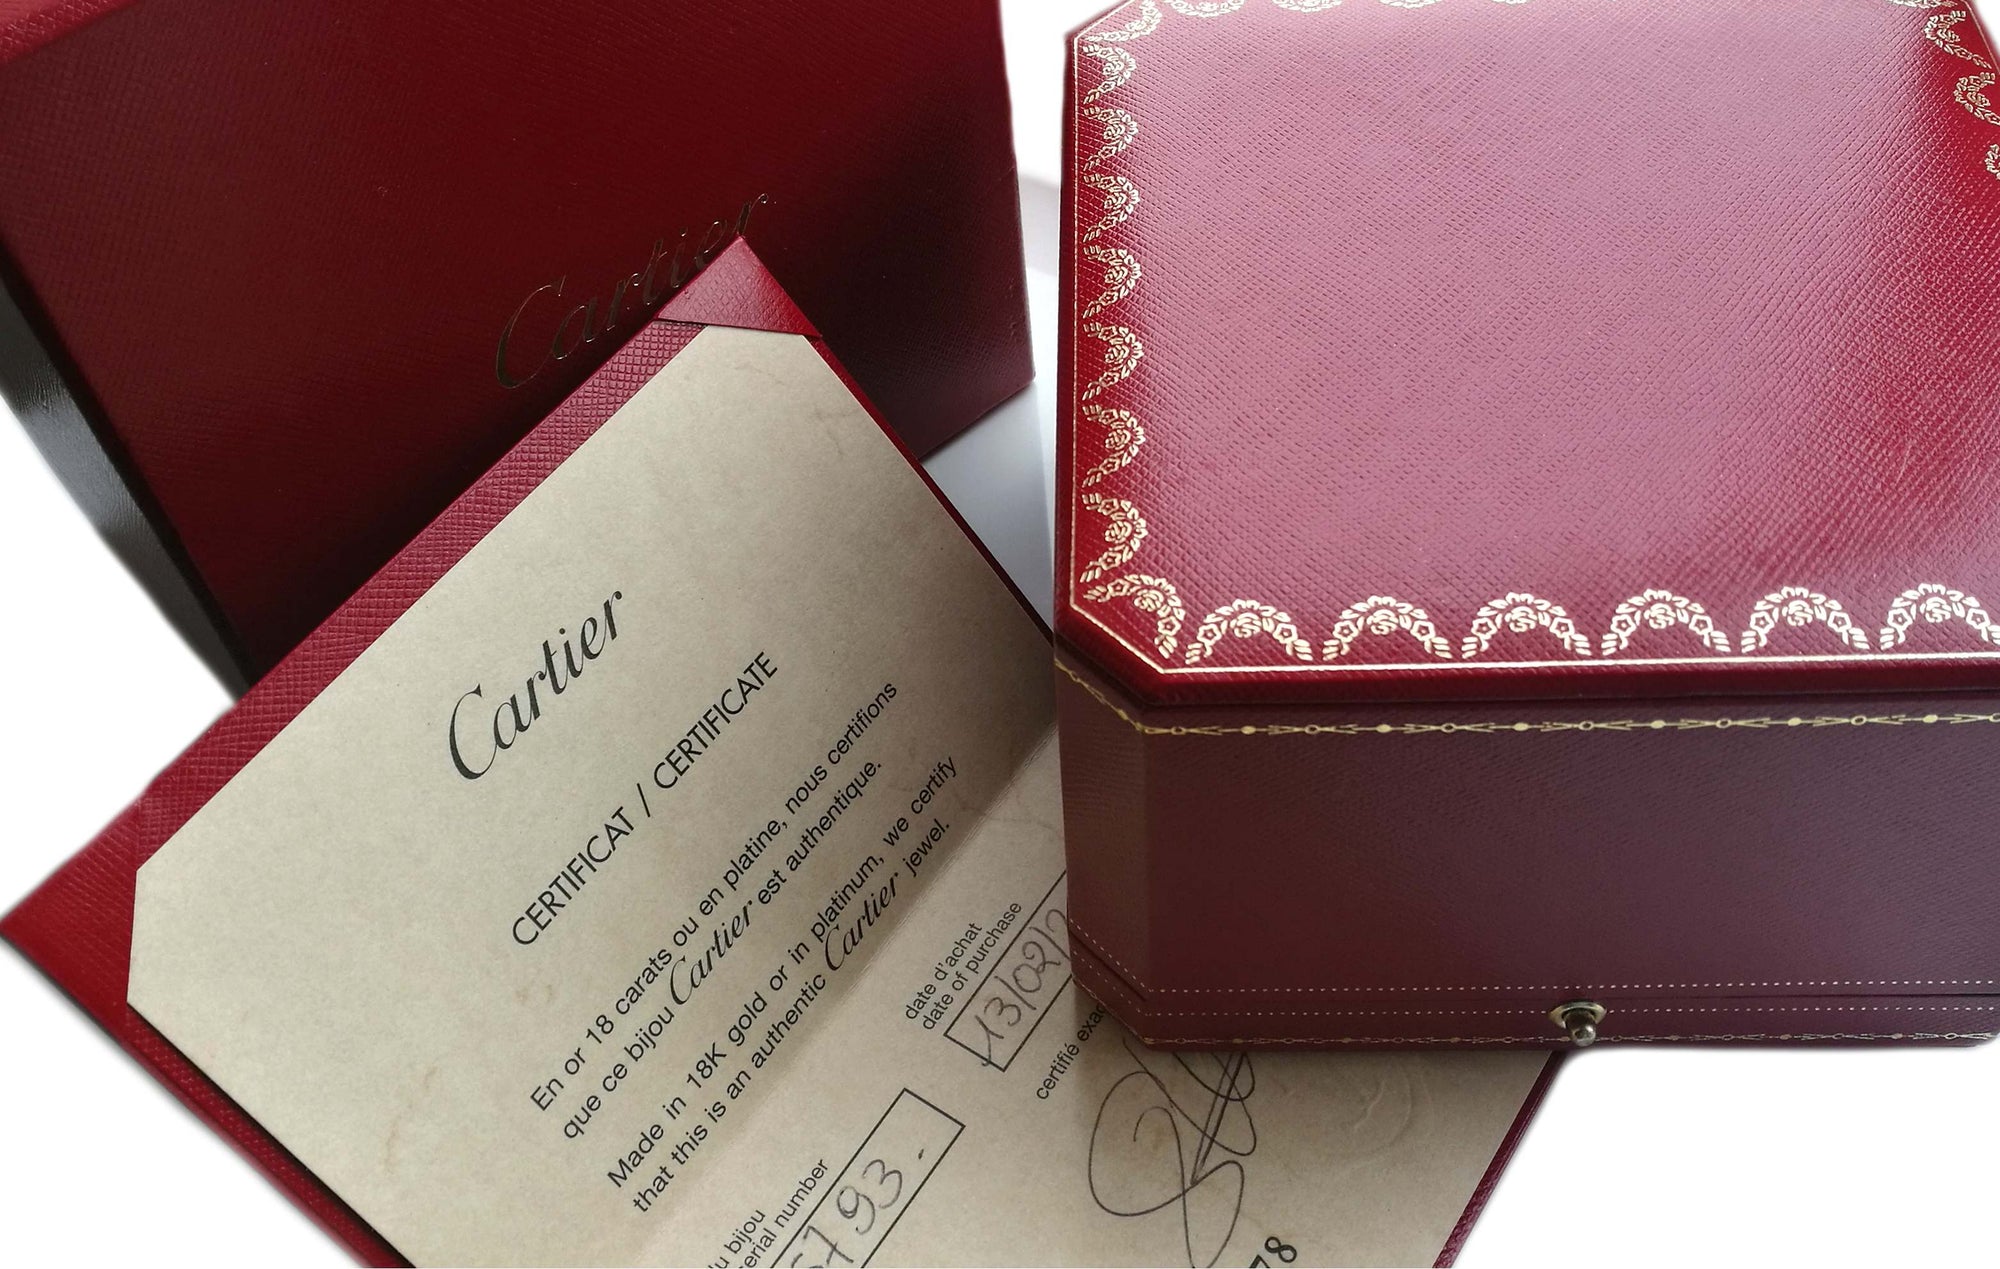 Cartier Trinity 18k Three Gold Wide Bracelet Bangle 66.5g 20.5cm (8 inches)